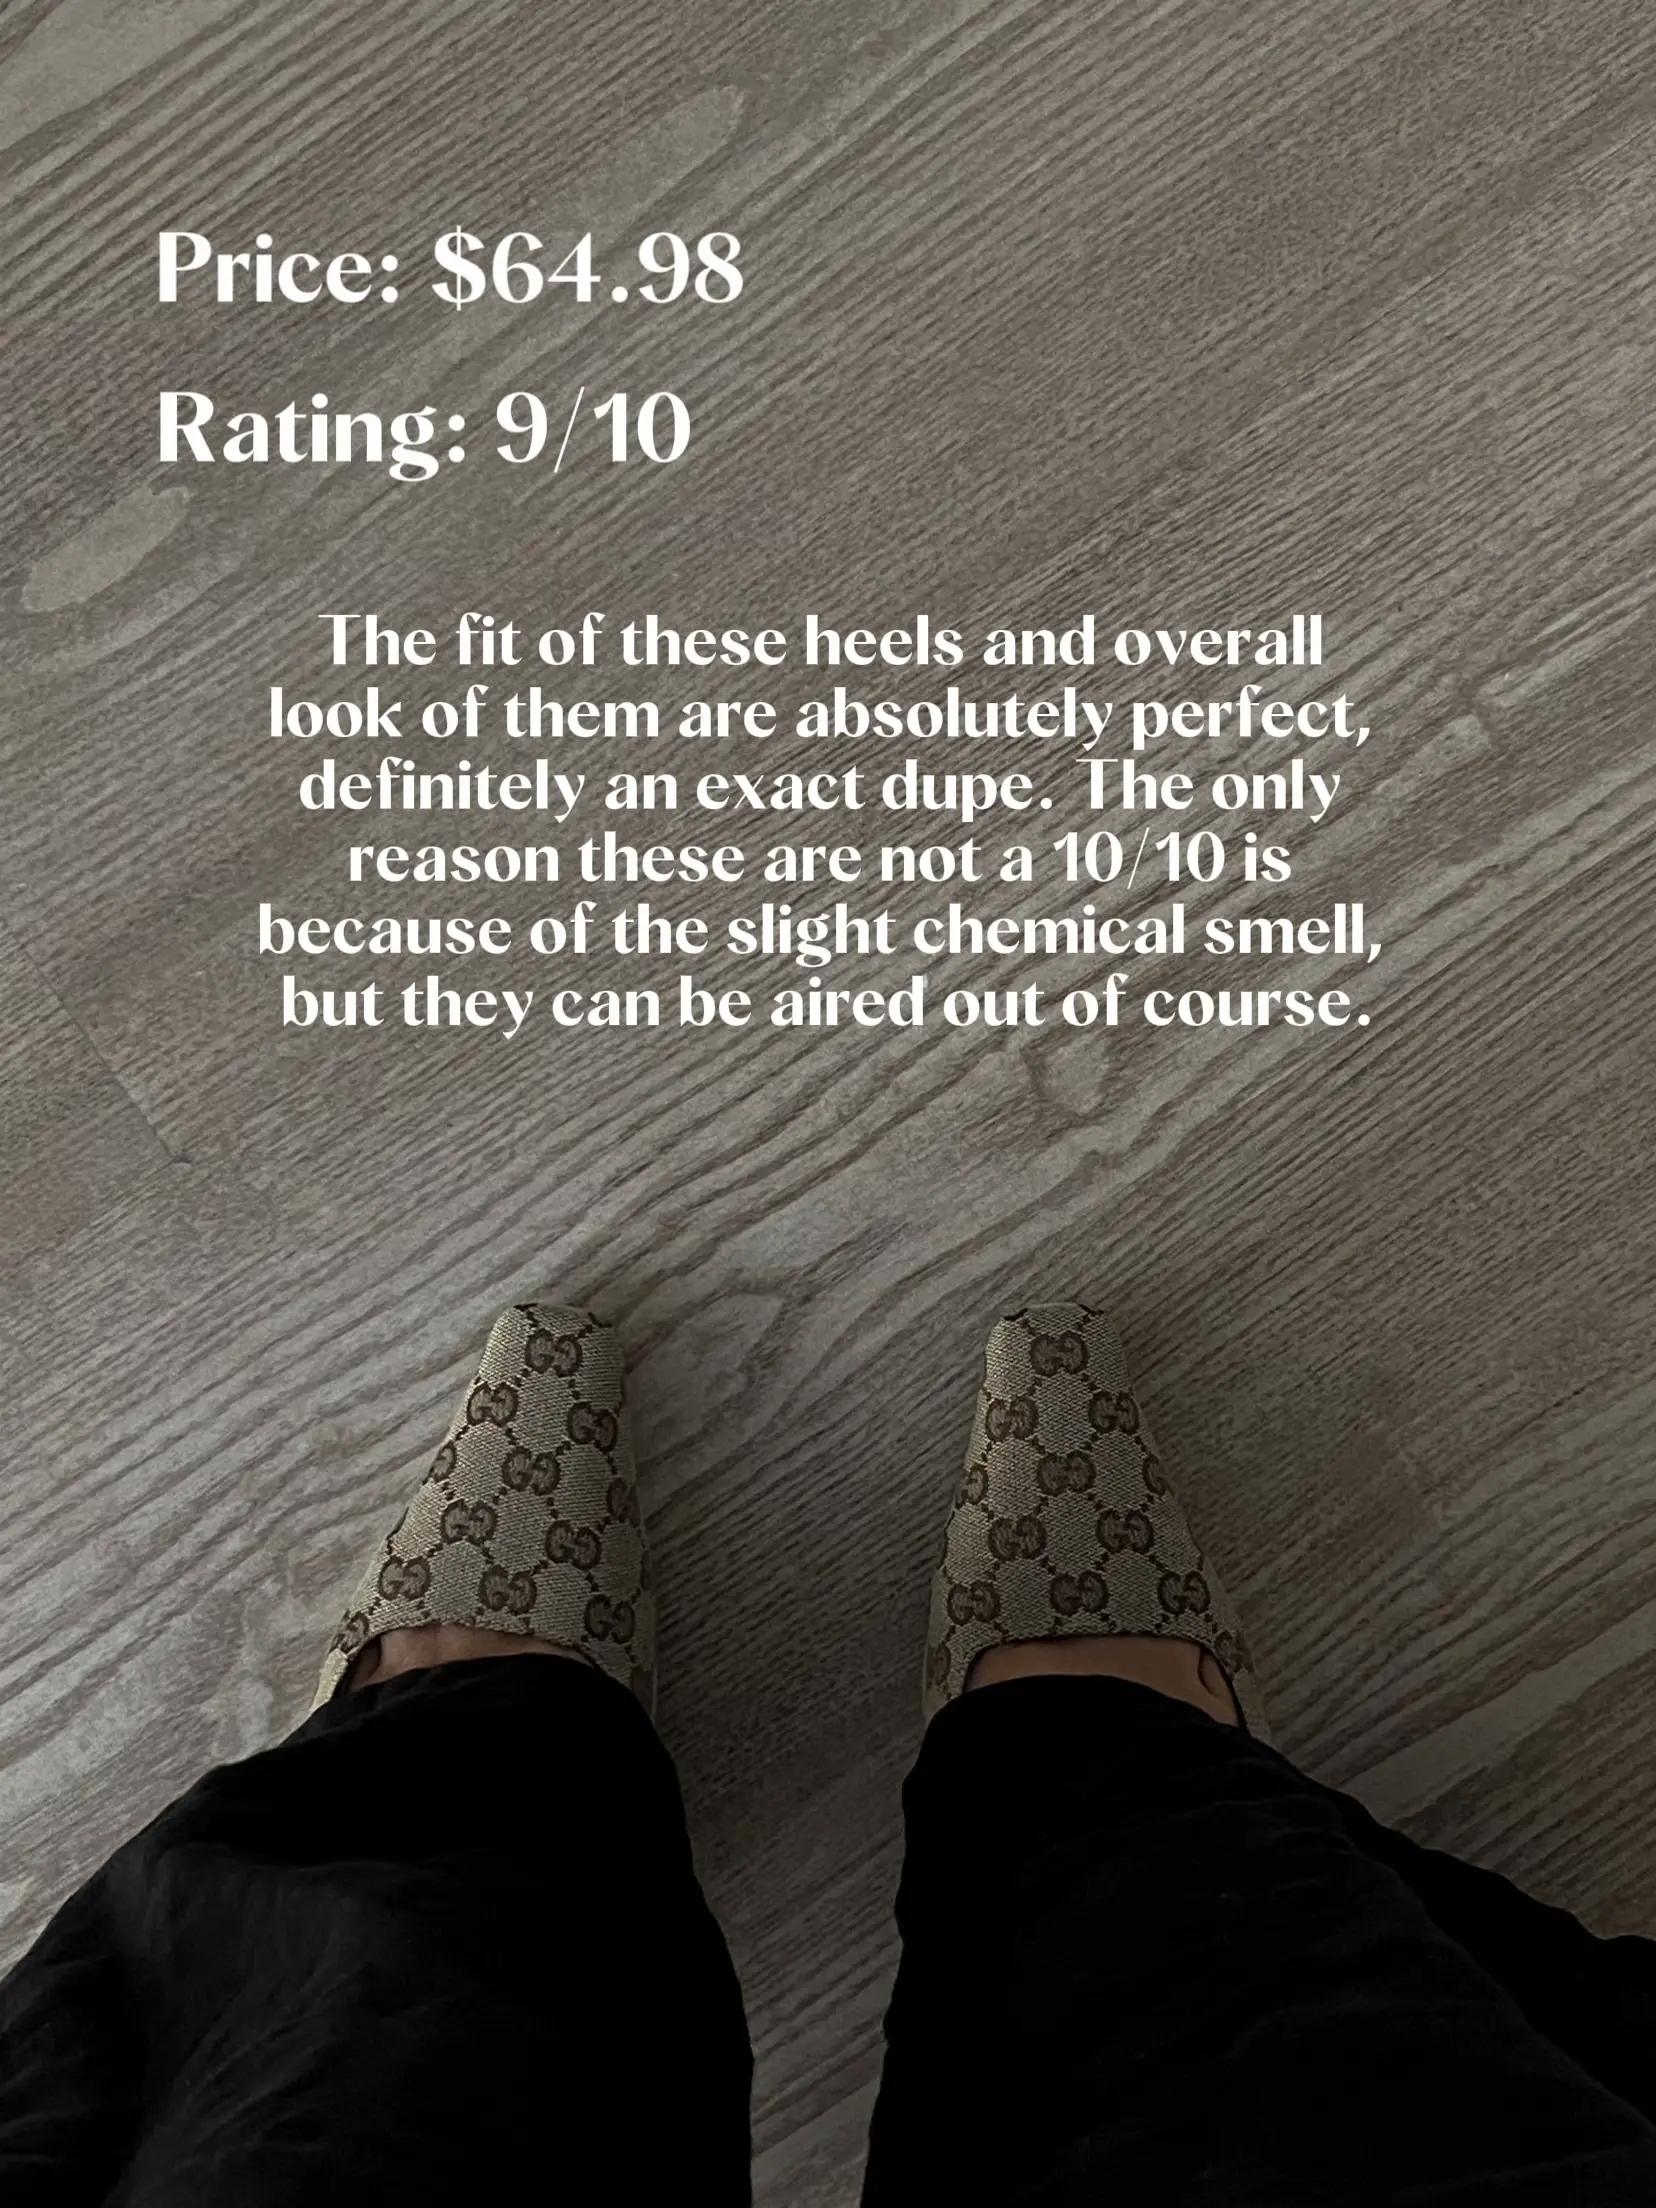 Gucci heels review (DHgate dupe)  oliviagrandis が投稿したフォト